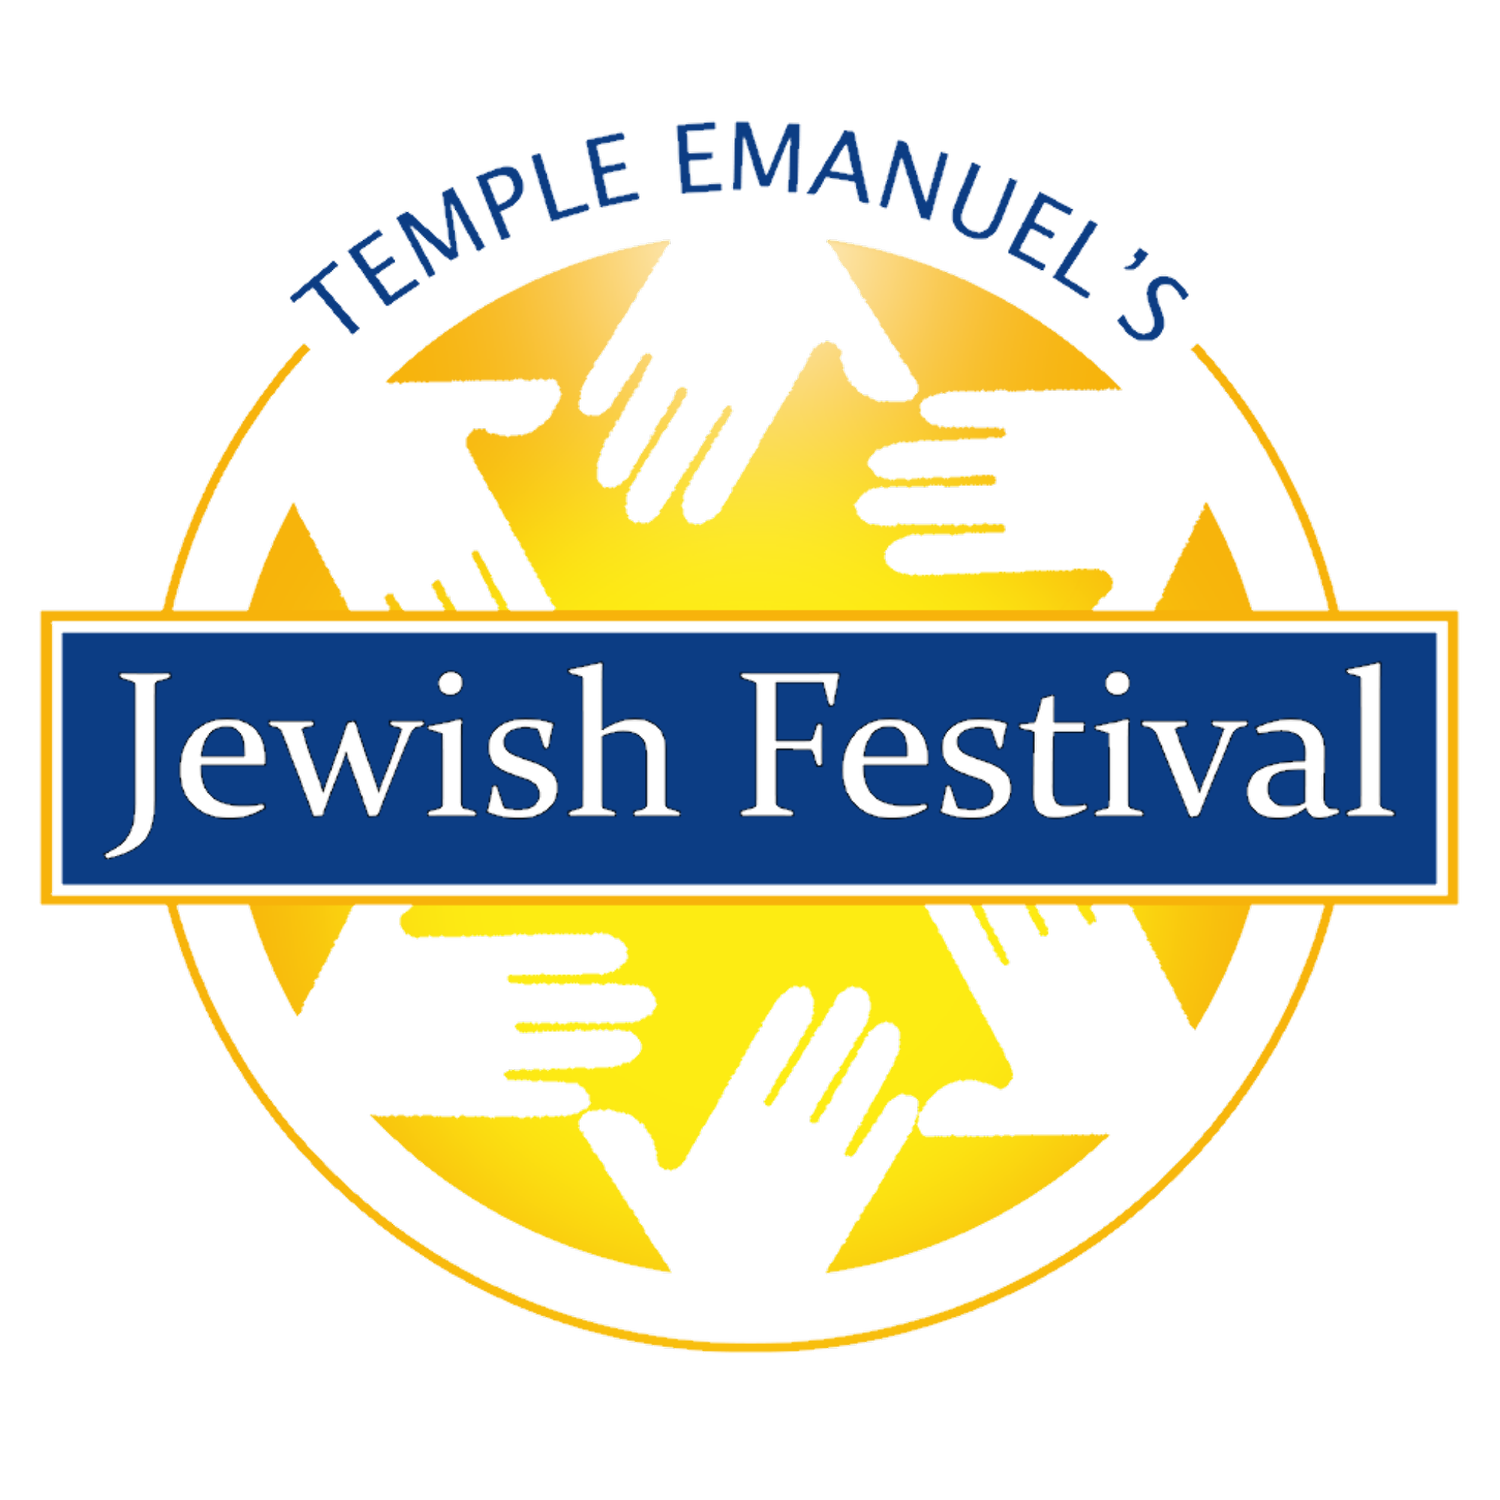 Temple Emanuel's Jewish Festival